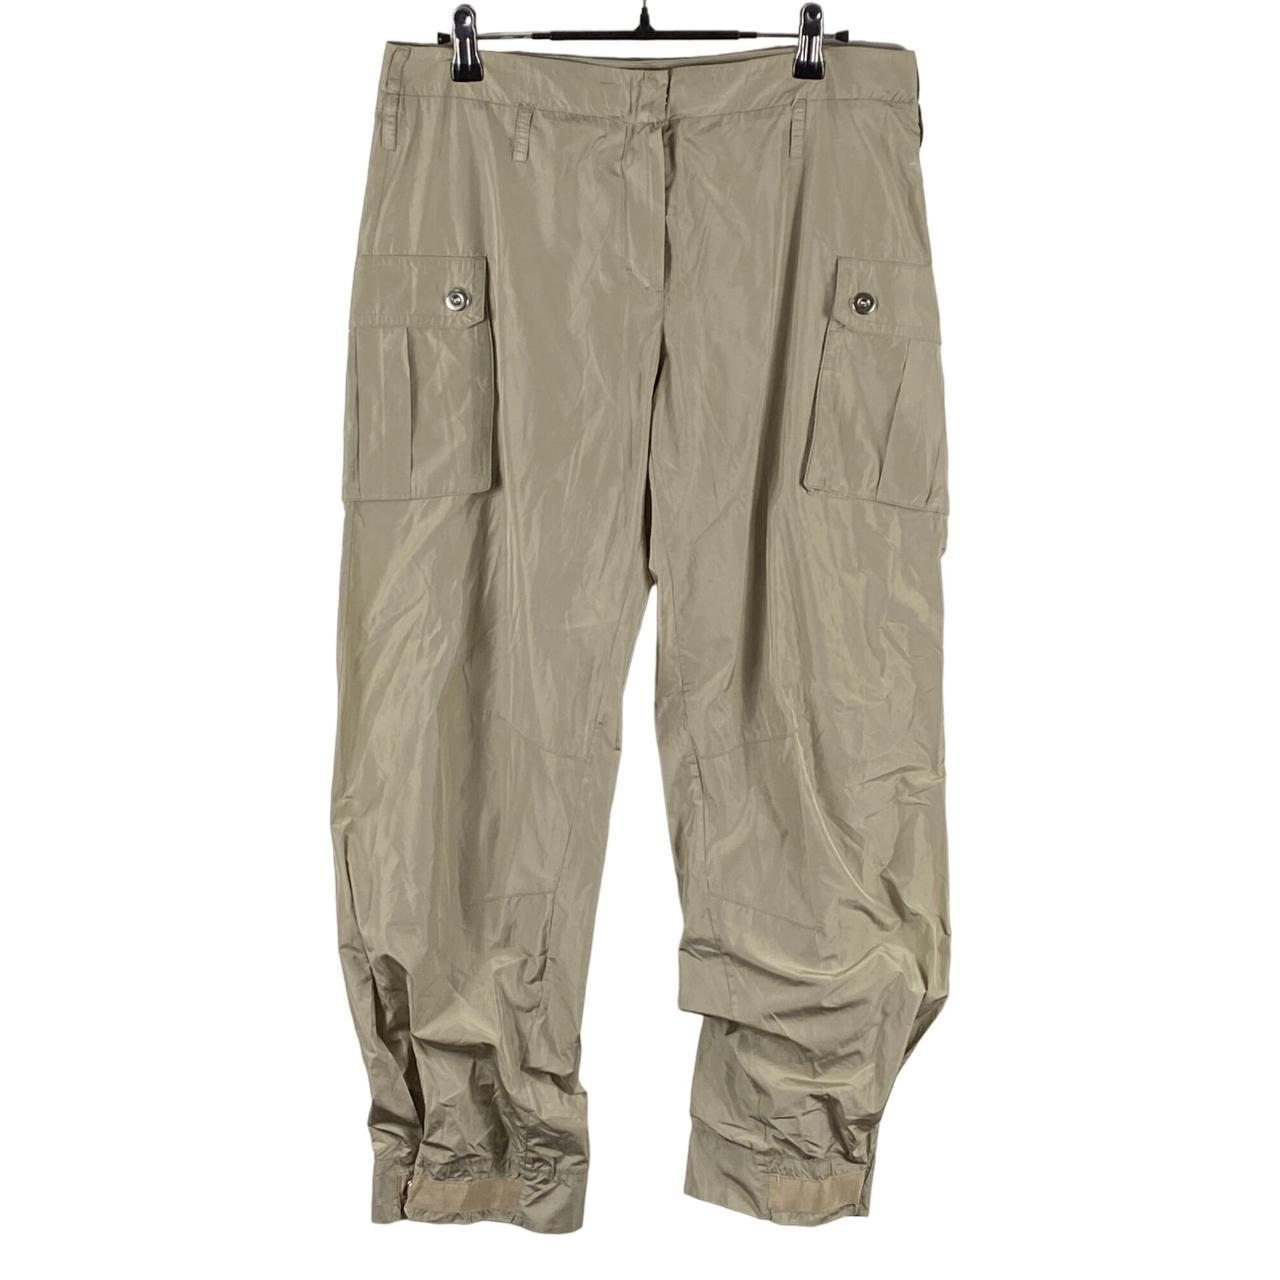 'S Max Mara Cargo Style Trouser Pants Beige Size M... - Depop